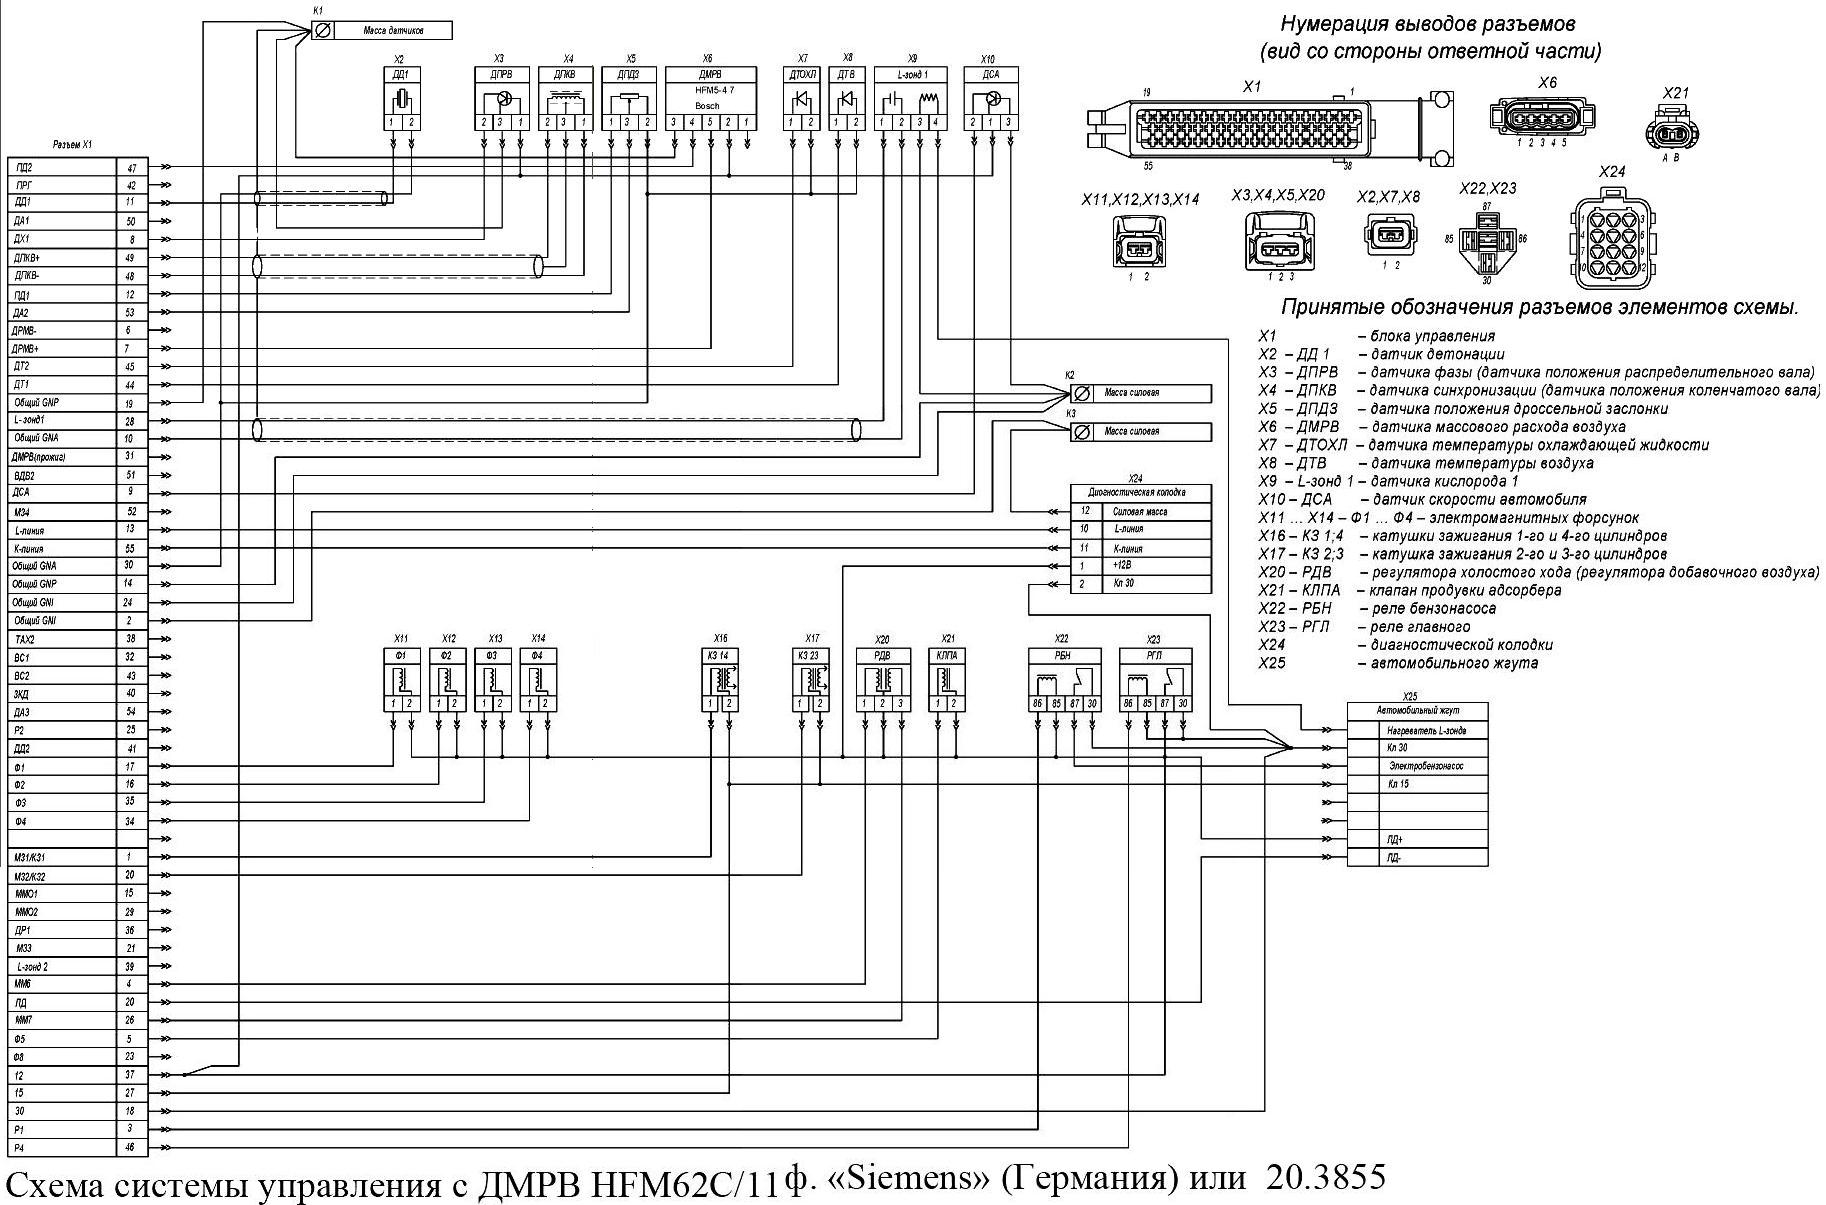 Схема СУД ЗМЗ-405 с ДМРВ HFM62C/11 «Siemens» или 20.3855